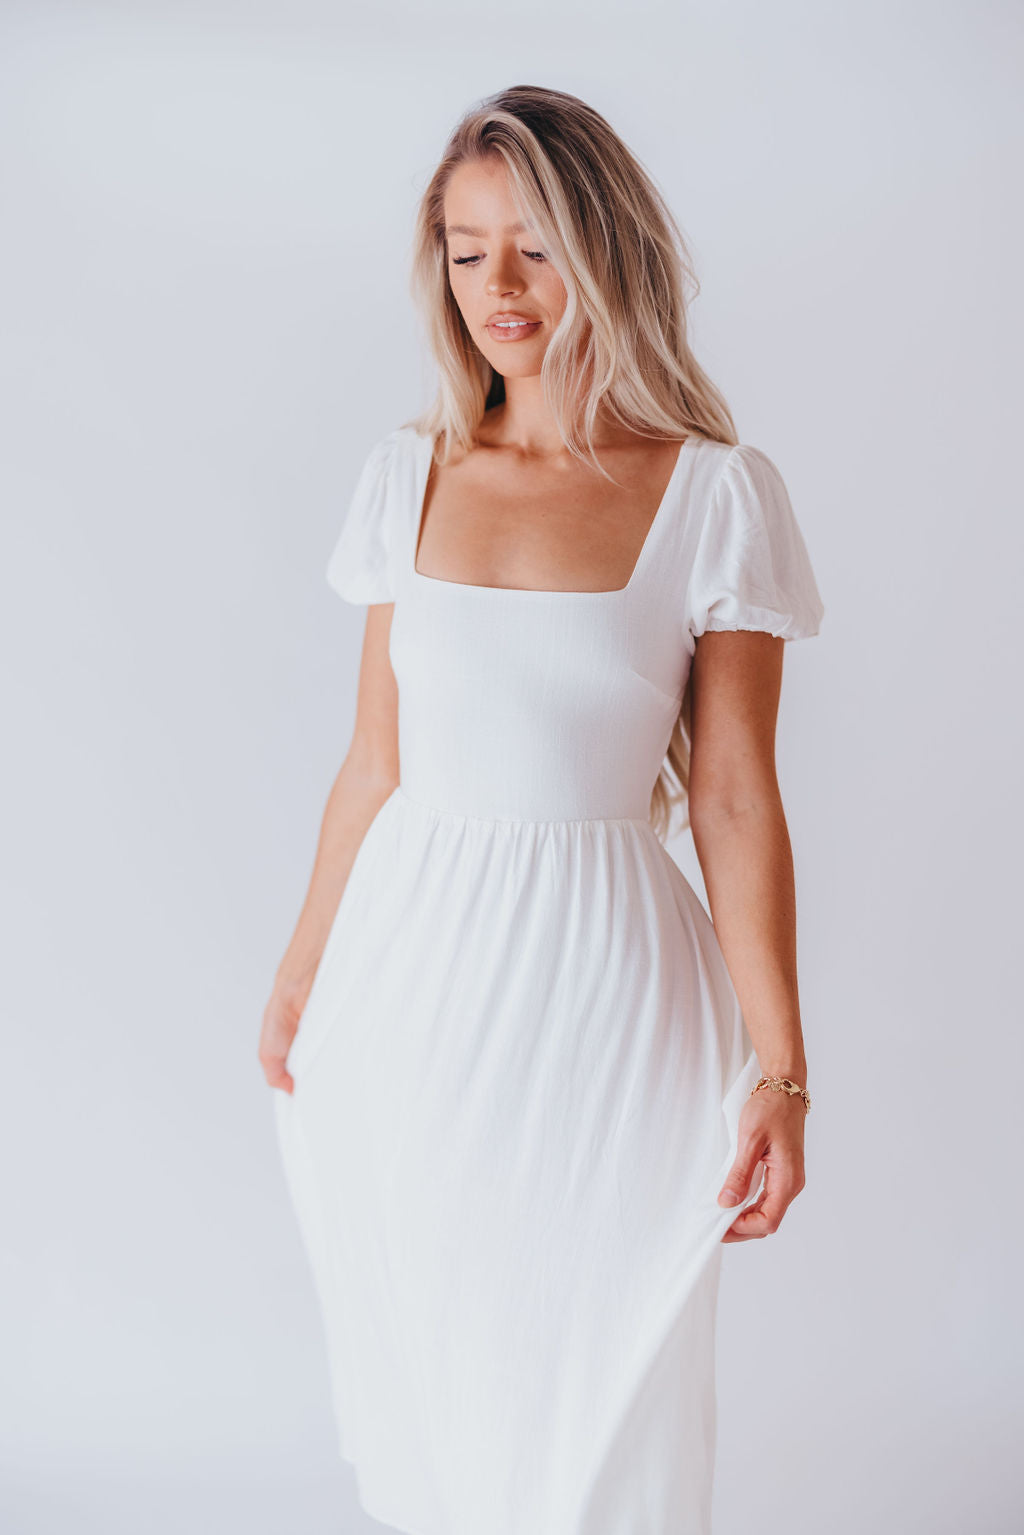 August Open Back Midi Dress in White - Bump Friendly